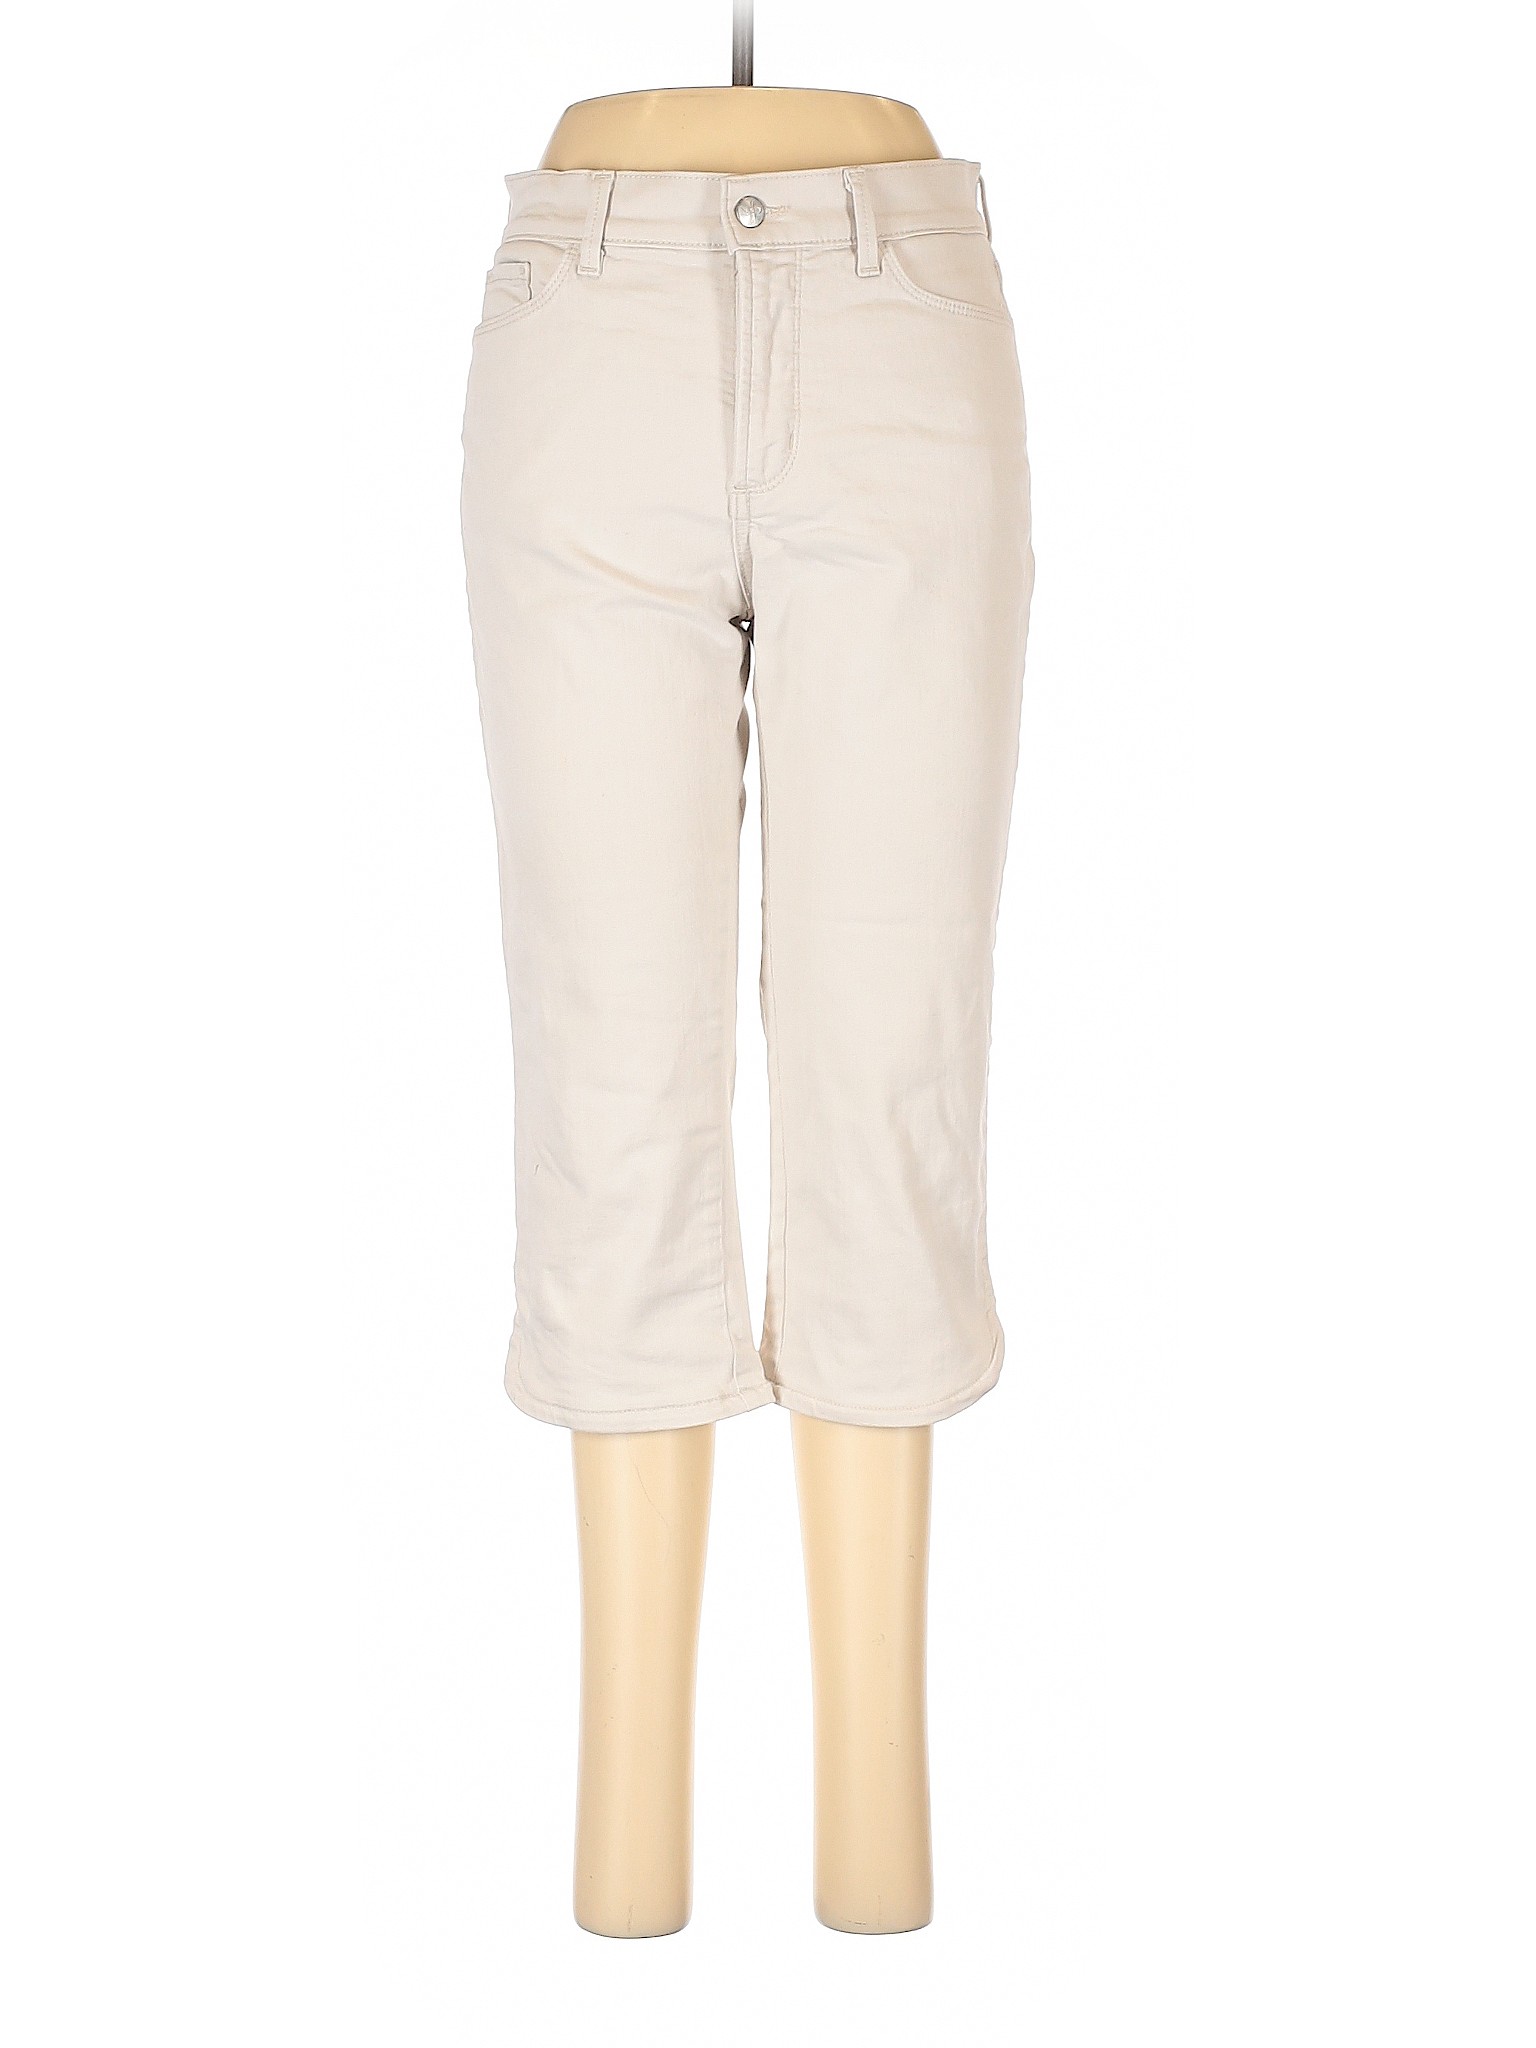 NYDJ Women Ivory Jeans 8 Petites | eBay